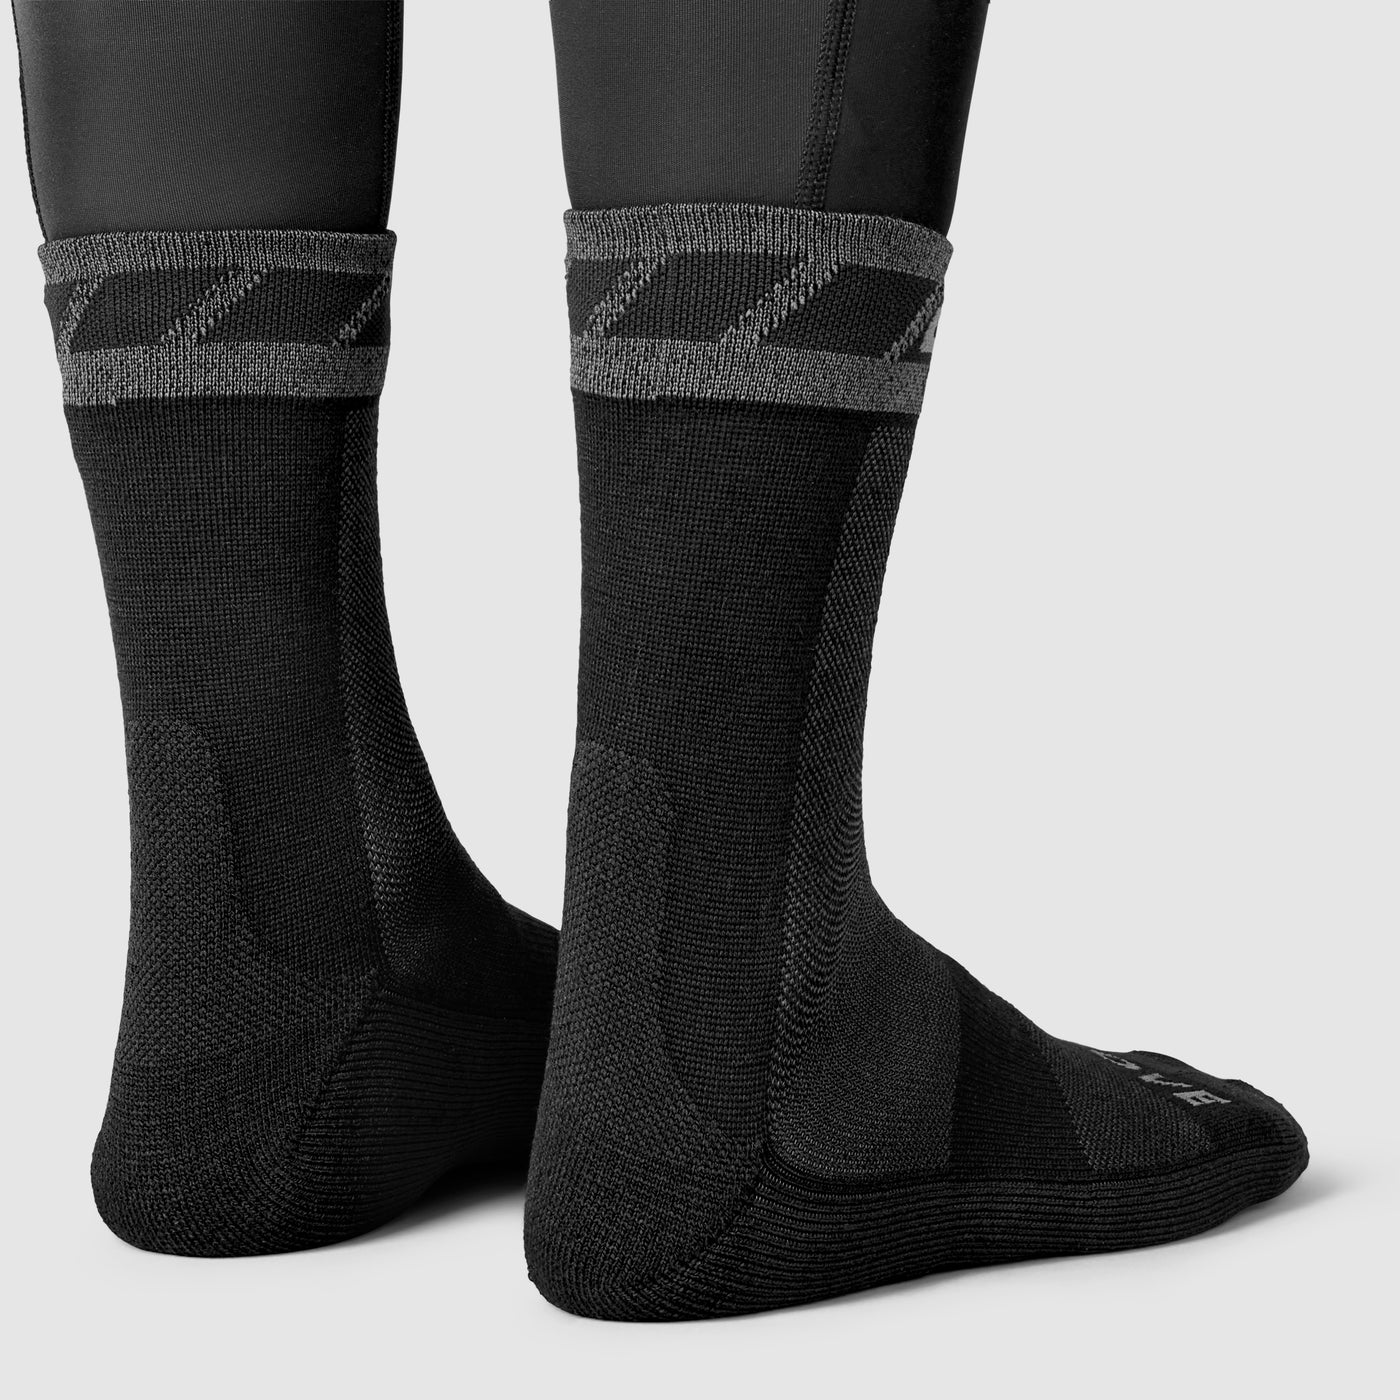 Gripperz Wool Socks Regular - Ansteys Healthcare